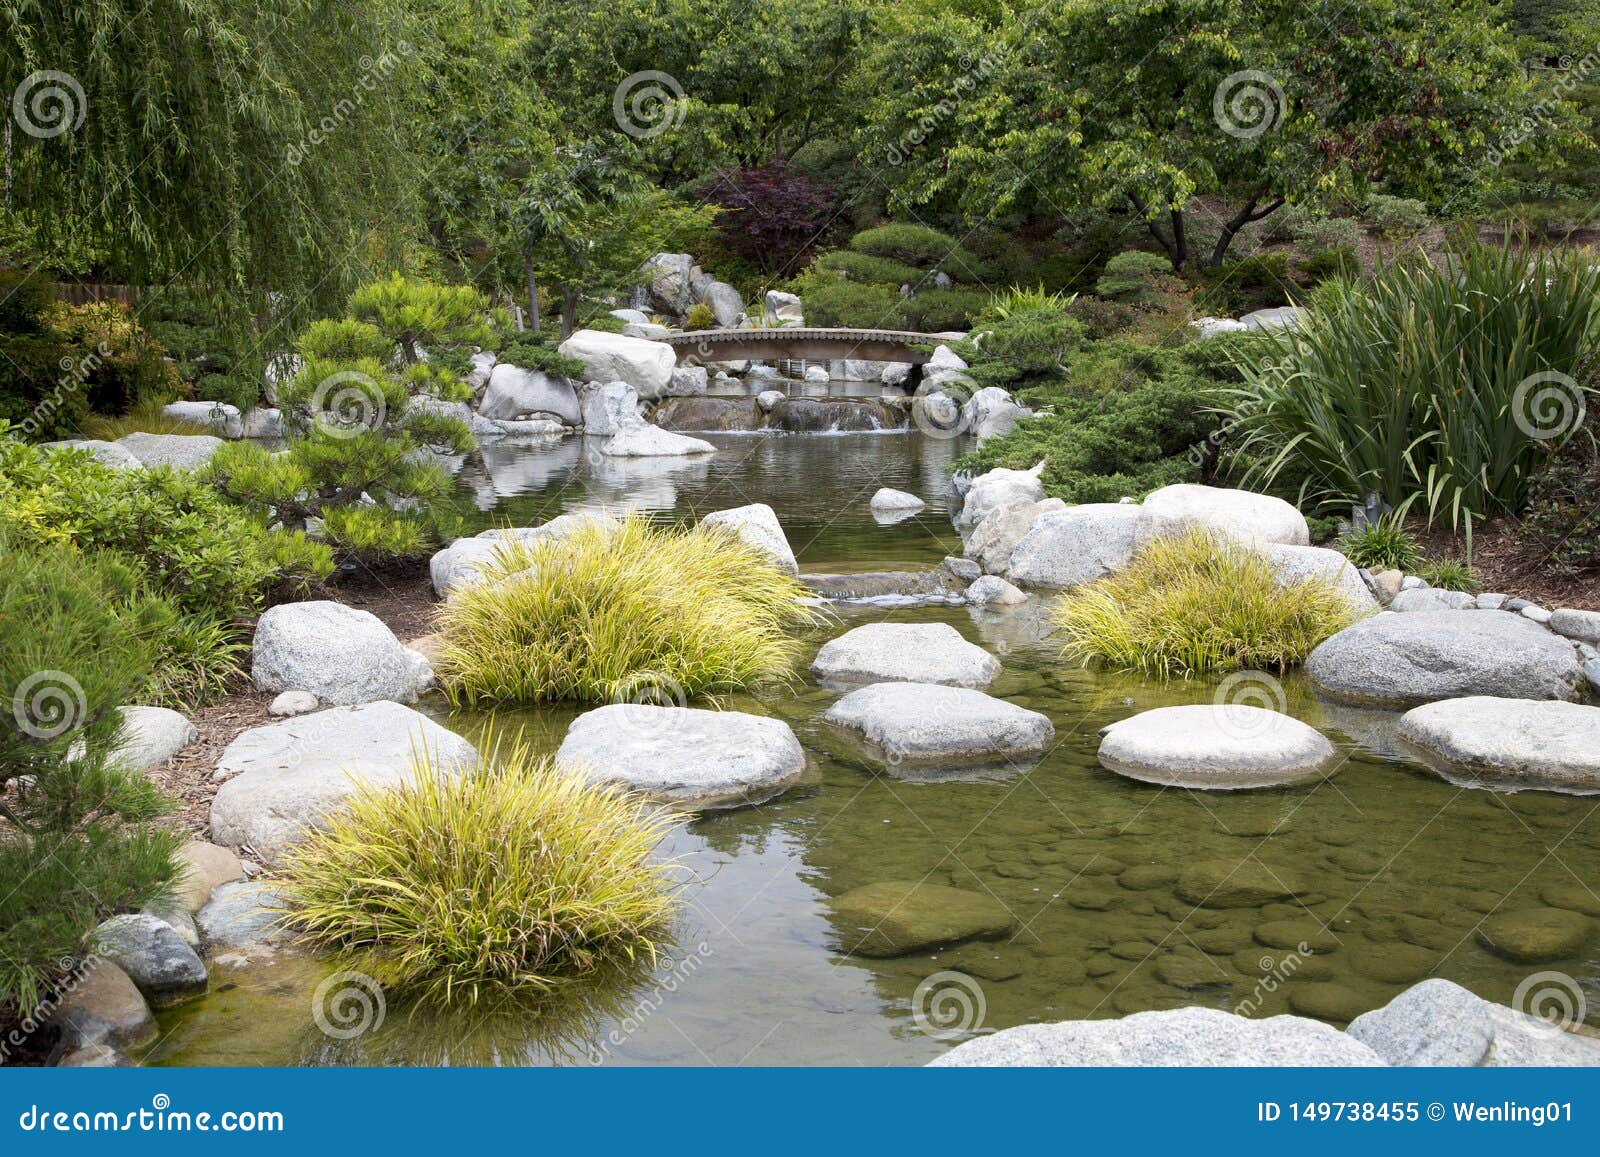 Japanese Friendship Garden In Balboa Park San Diego Stock Image